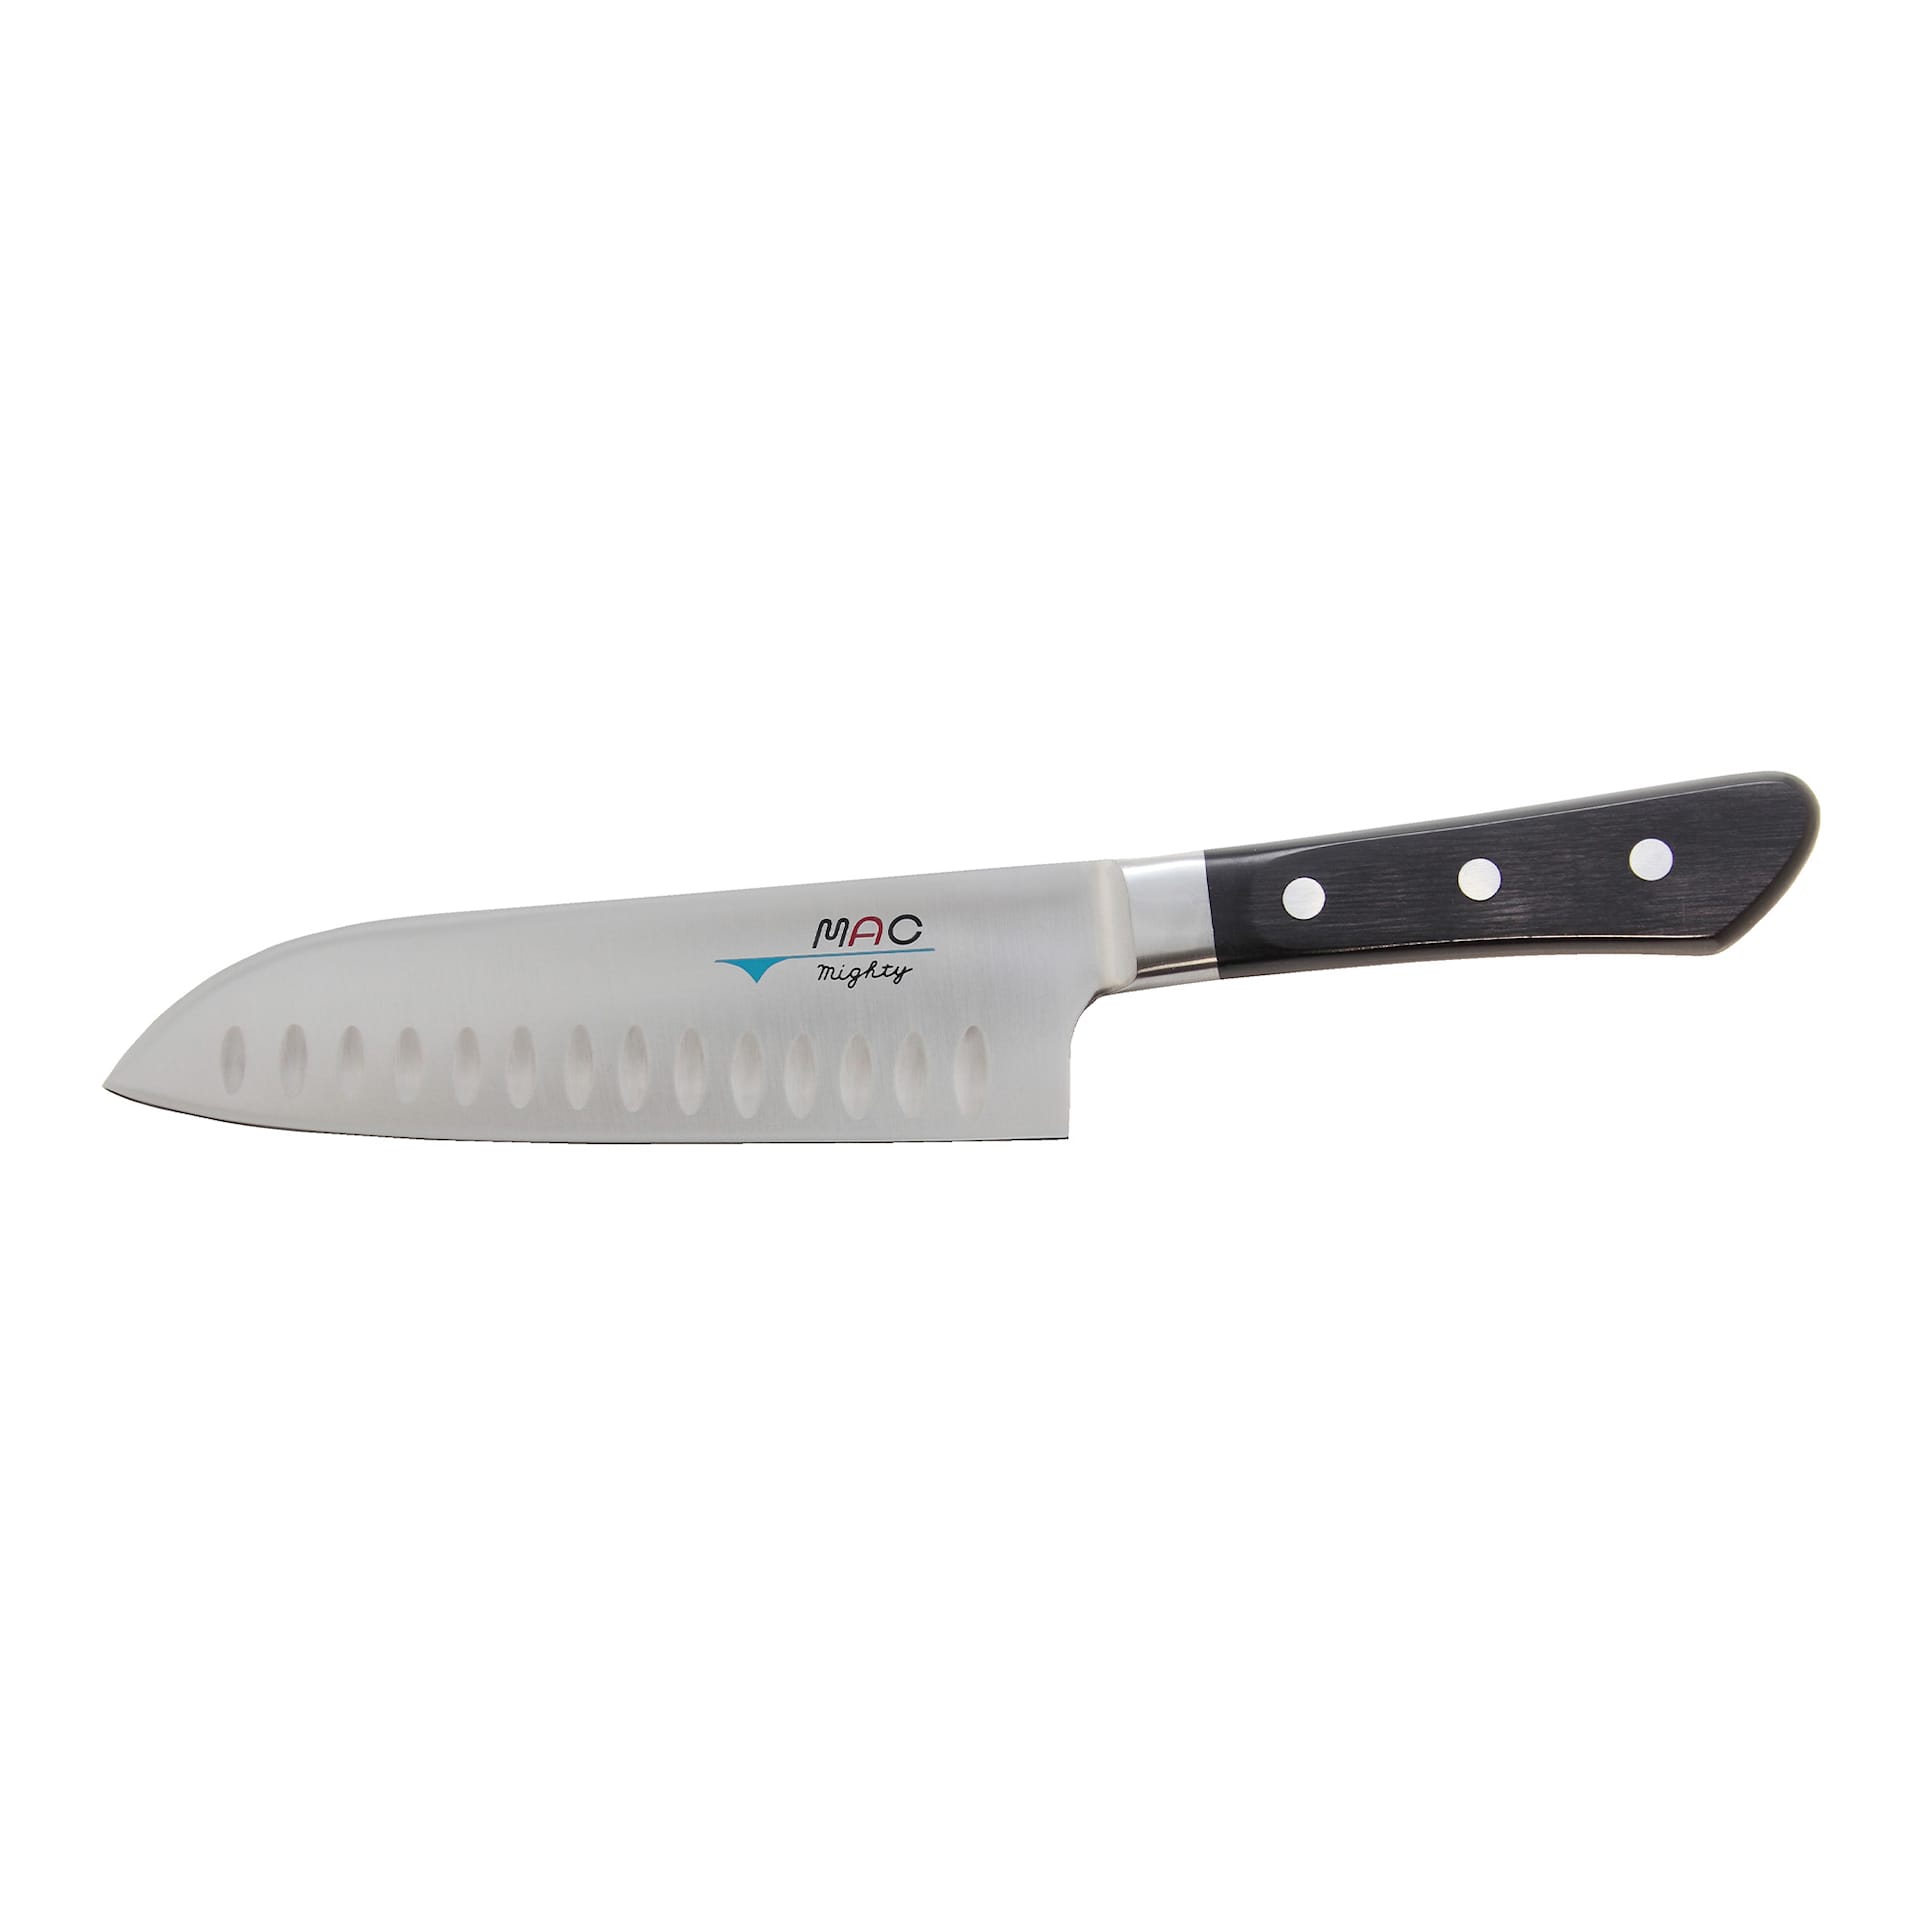 Mighty - Chef's knife with air gap, 17 cm - MAC - NO GA